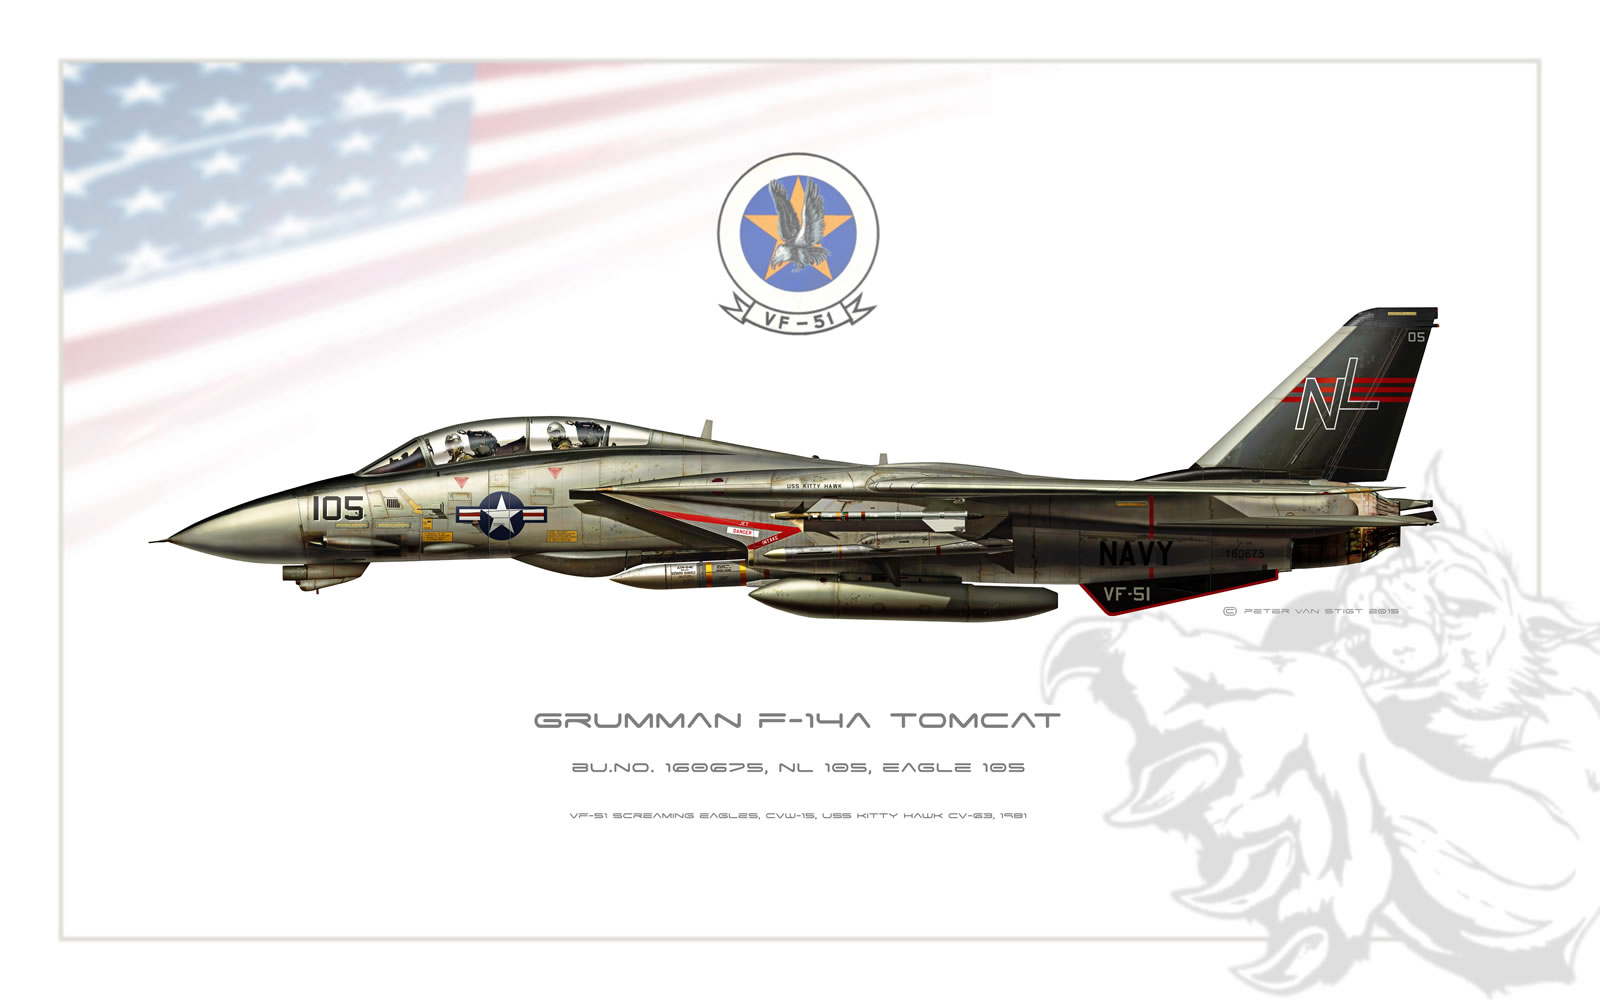 VF-51 Screaming Eagles F-14 Tomcat Profile